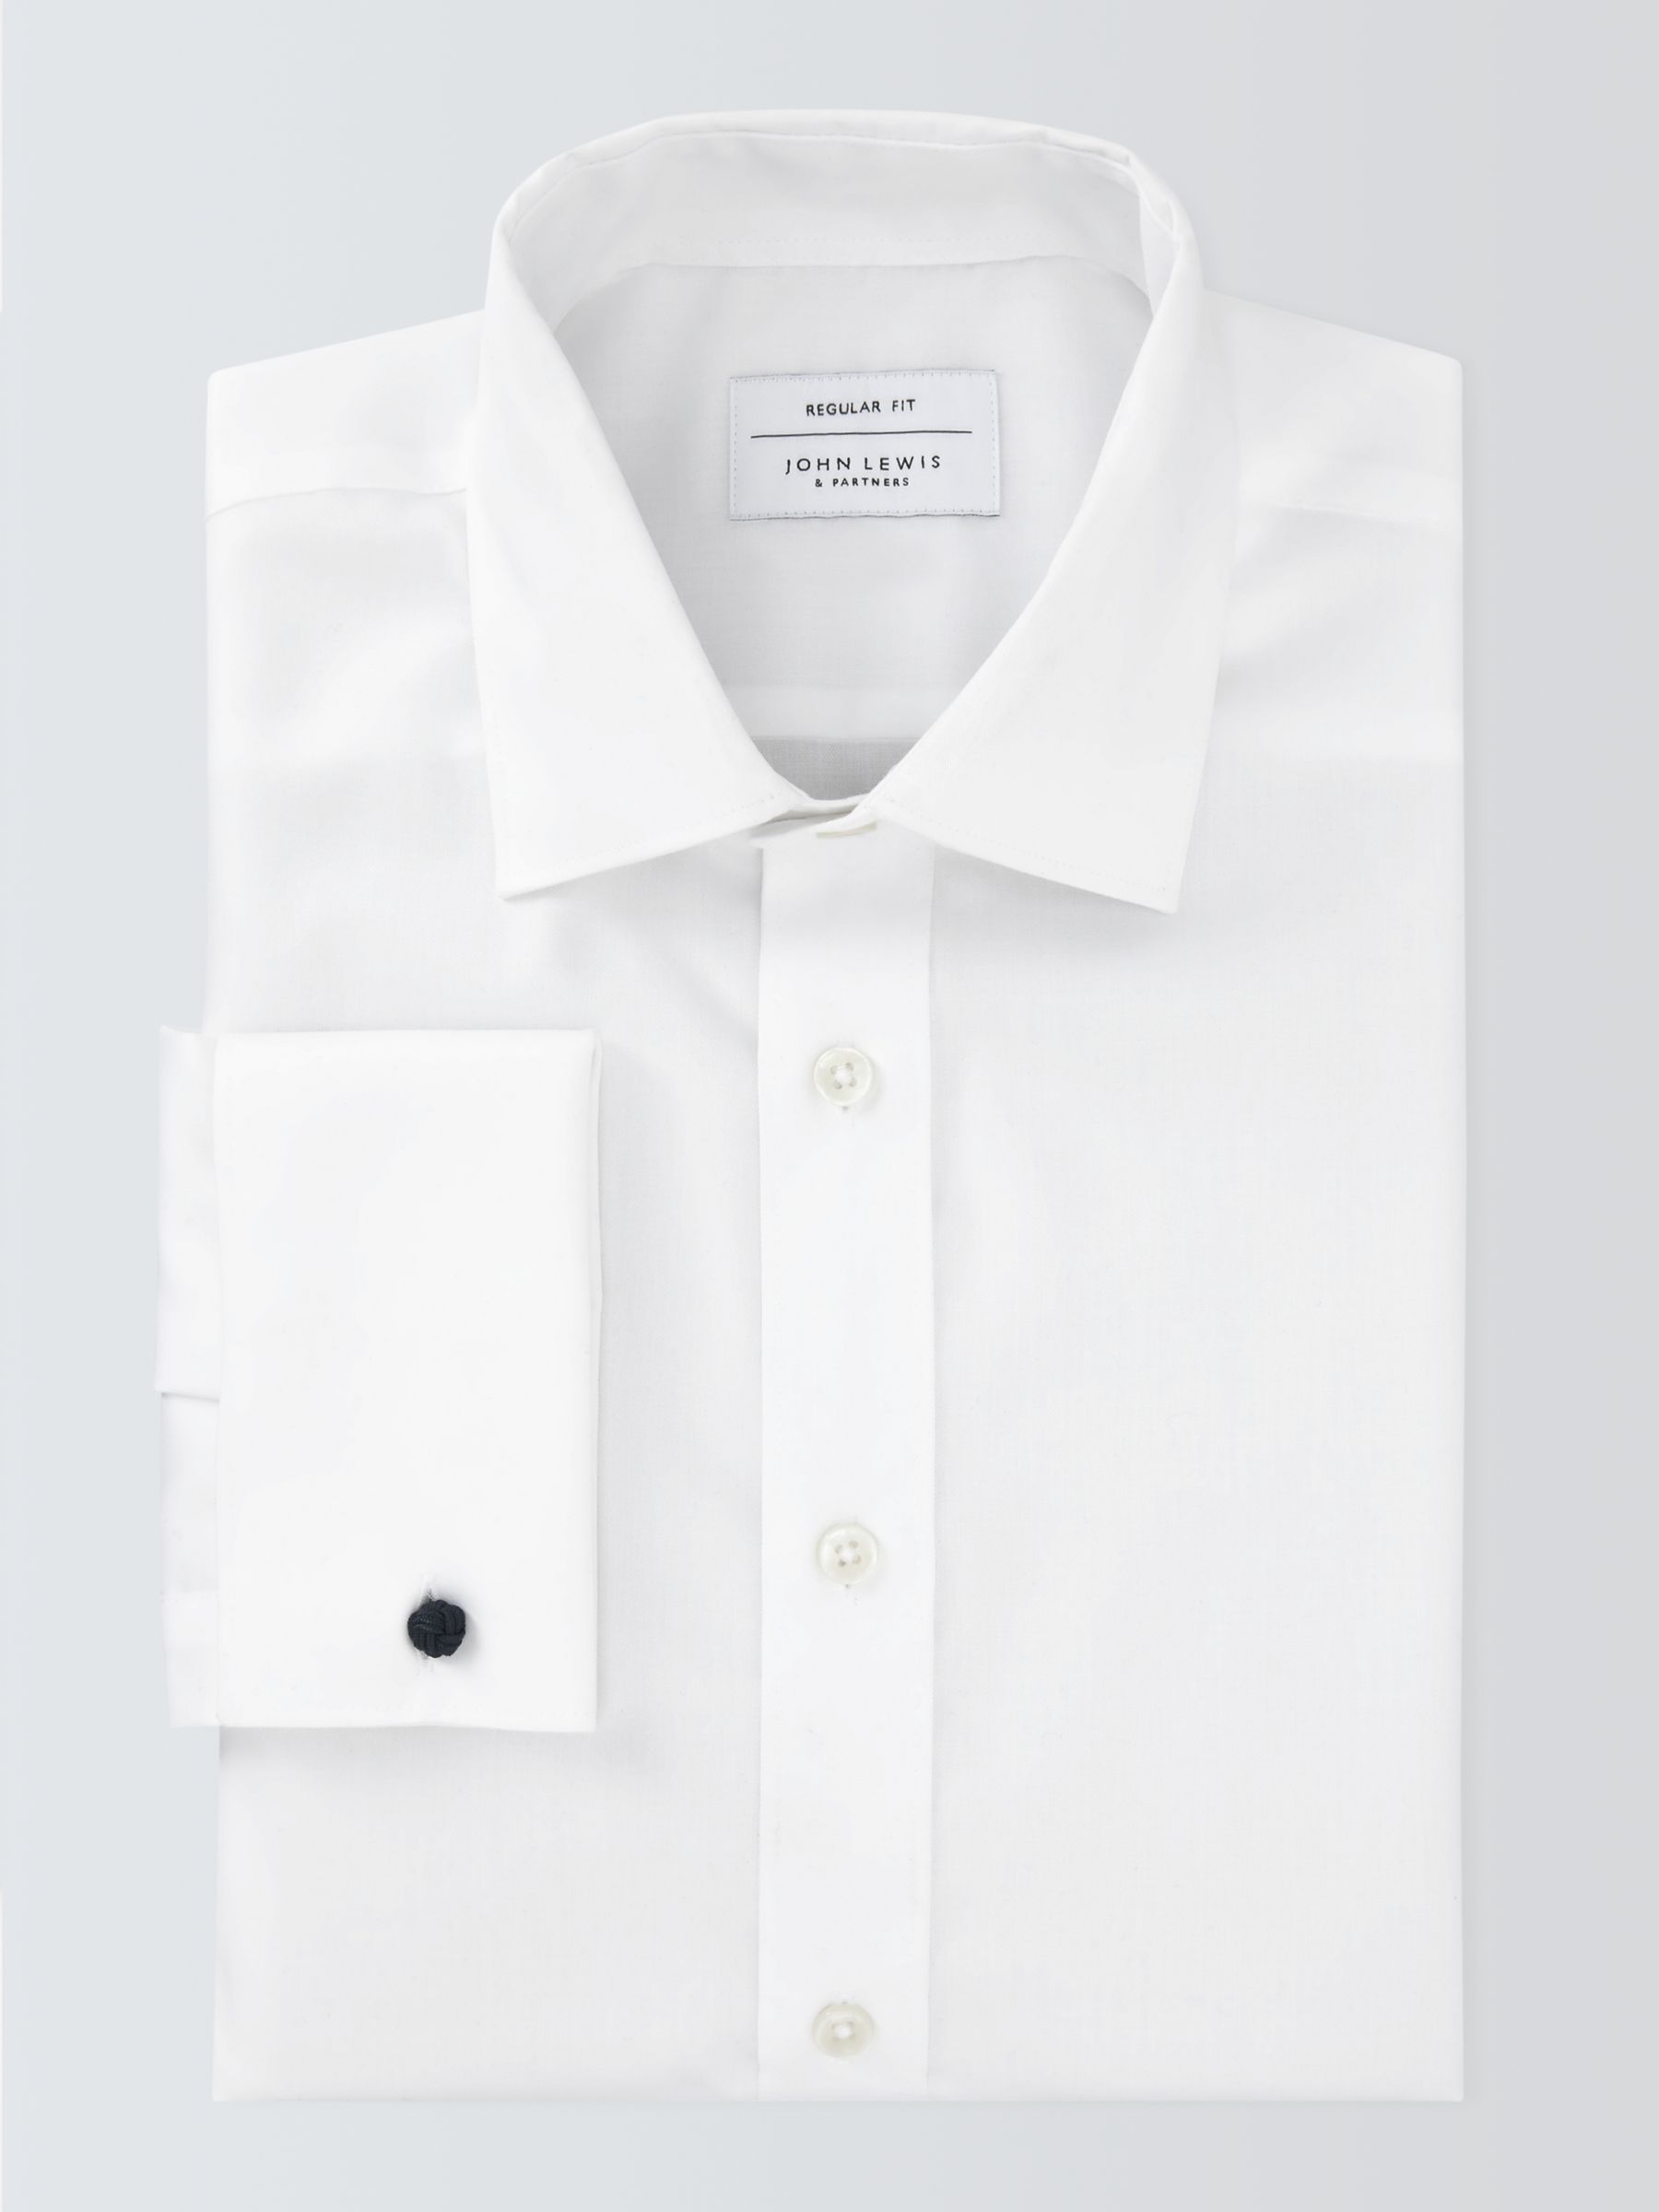 John Lewis Non Iron Twill Regular Fit Double Cuff Shirt, White, 17.5R